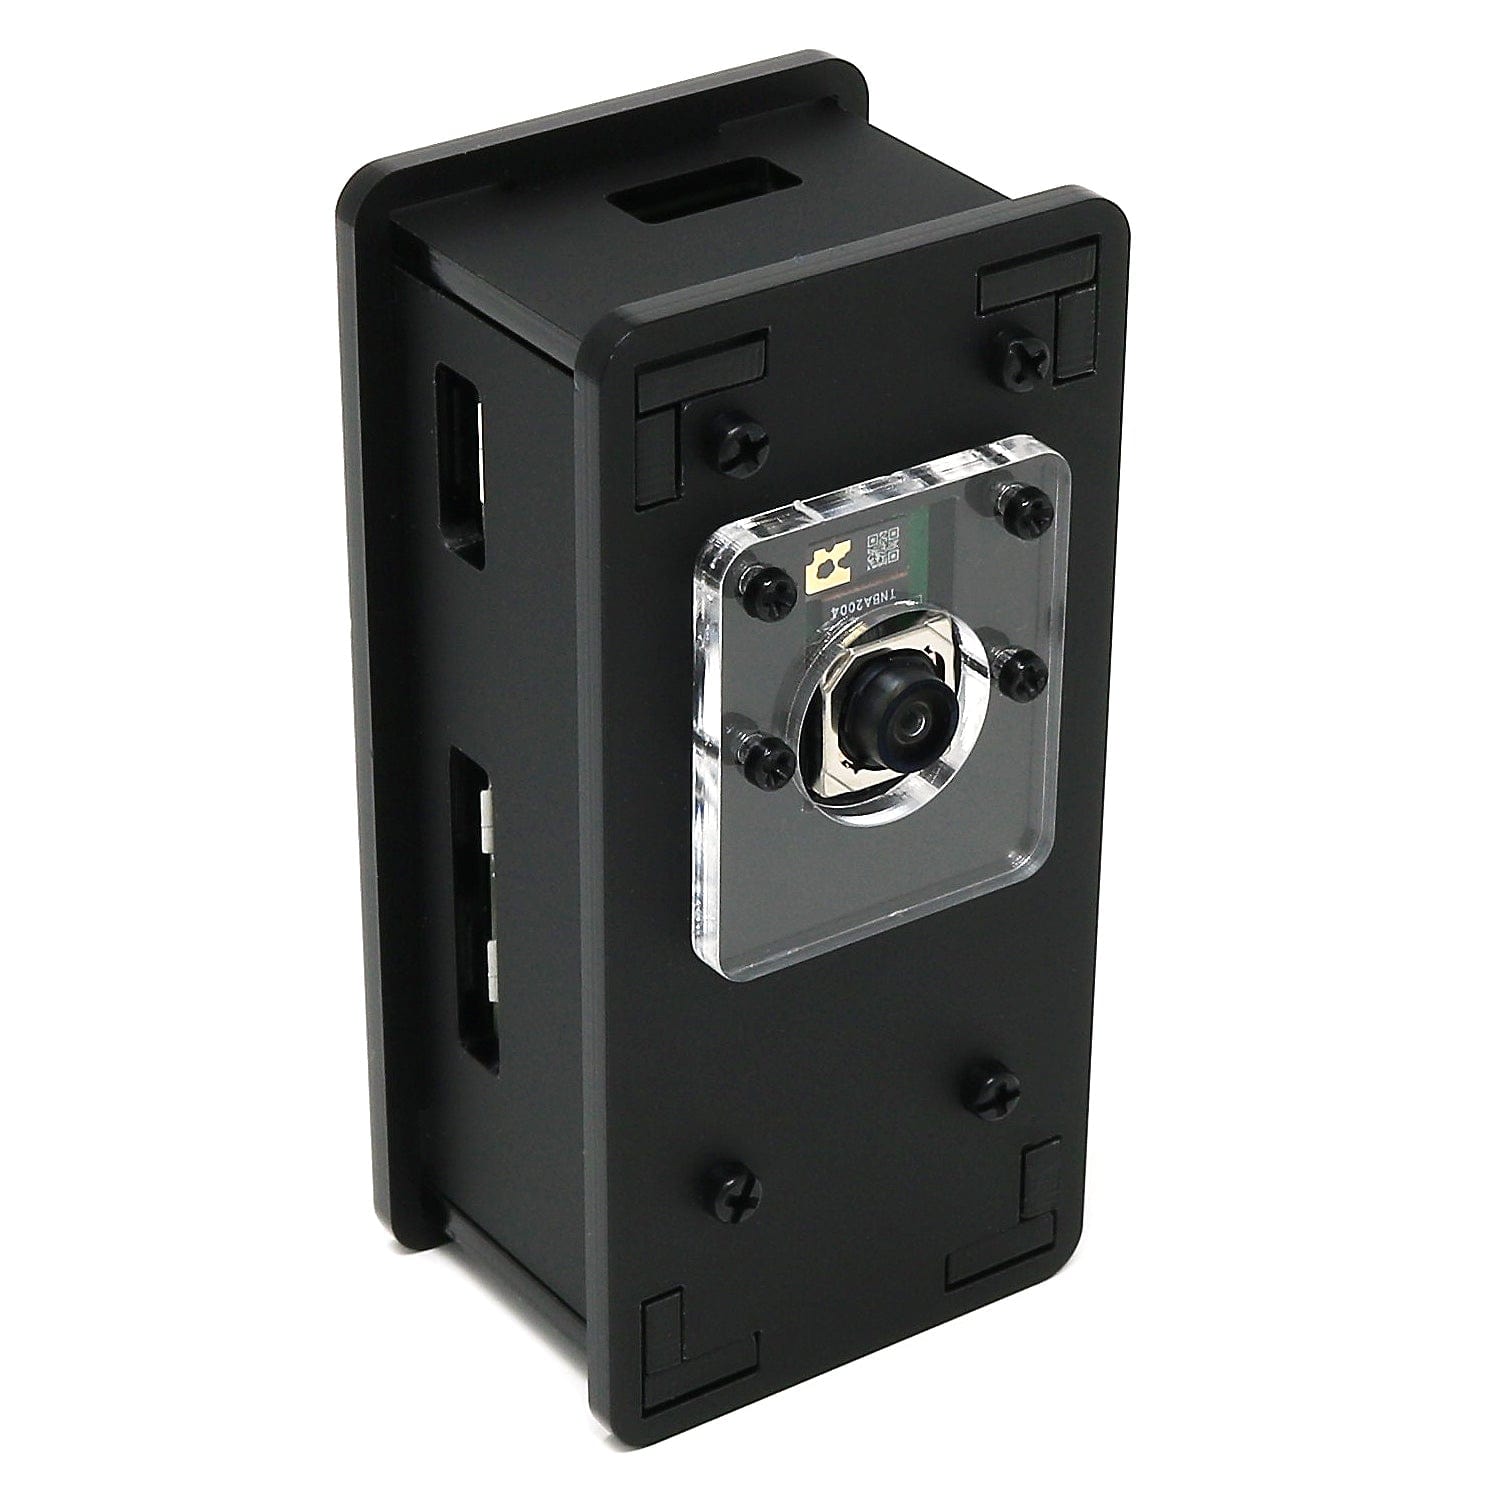 Camera Case for Raspberry Pi Zero - The Pi Hut